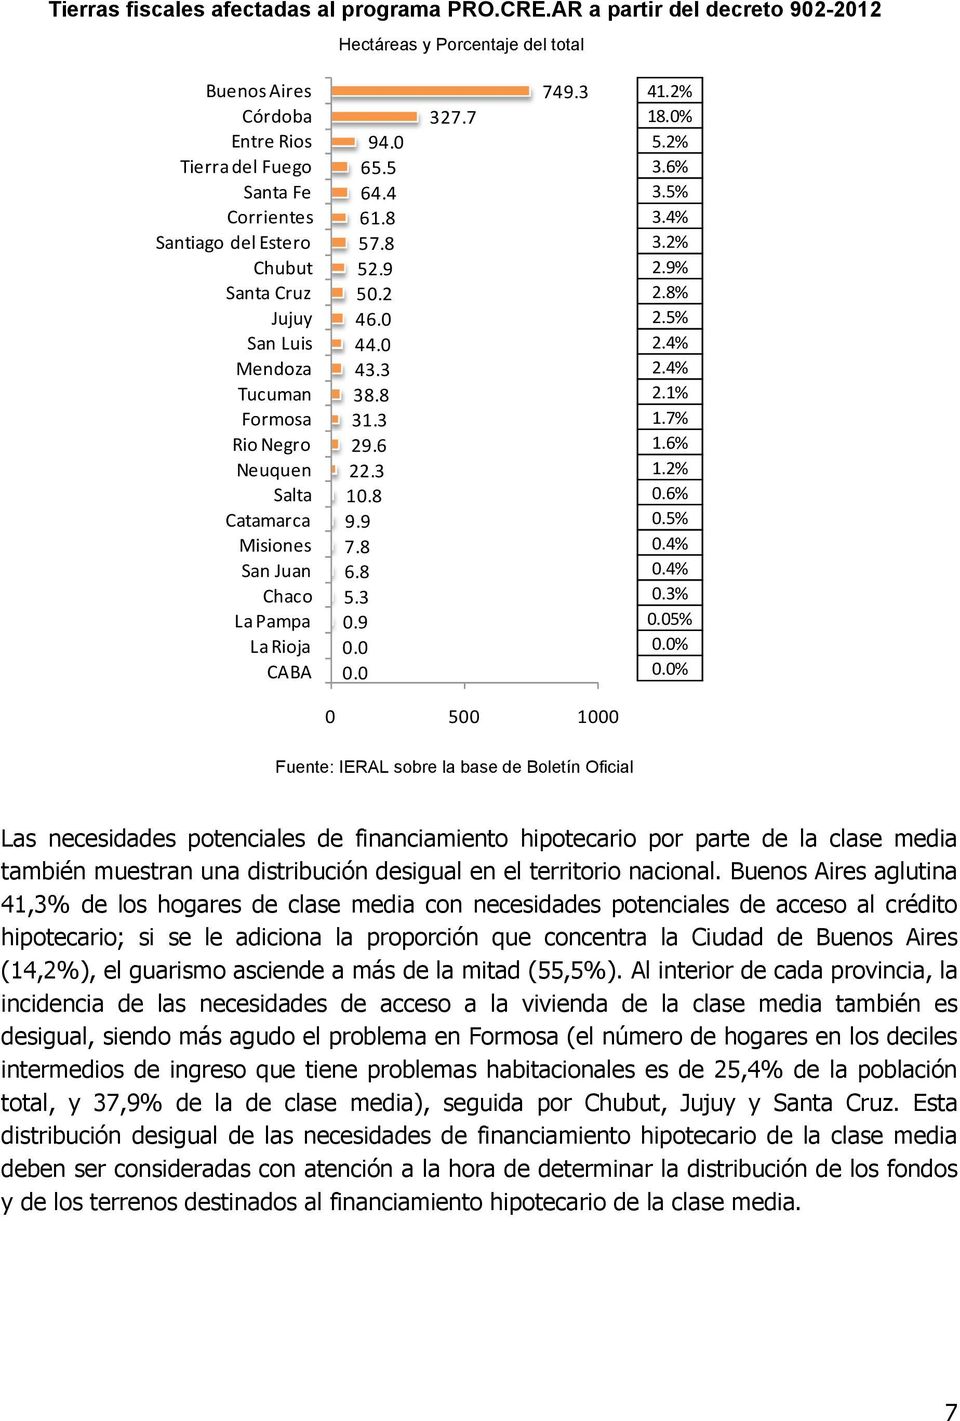 3 1.7% Rio Negro 29.6 1.6% Neuquen 22.3 1.2% Salta 10.8 0.6% Catamarca 9.9 0.5% Misiones 7.8 0.4% San Juan 6.8 0.4% Chaco 5.3 0.3% La Pampa 0.9 0.05% La Rioja 0.0 0.